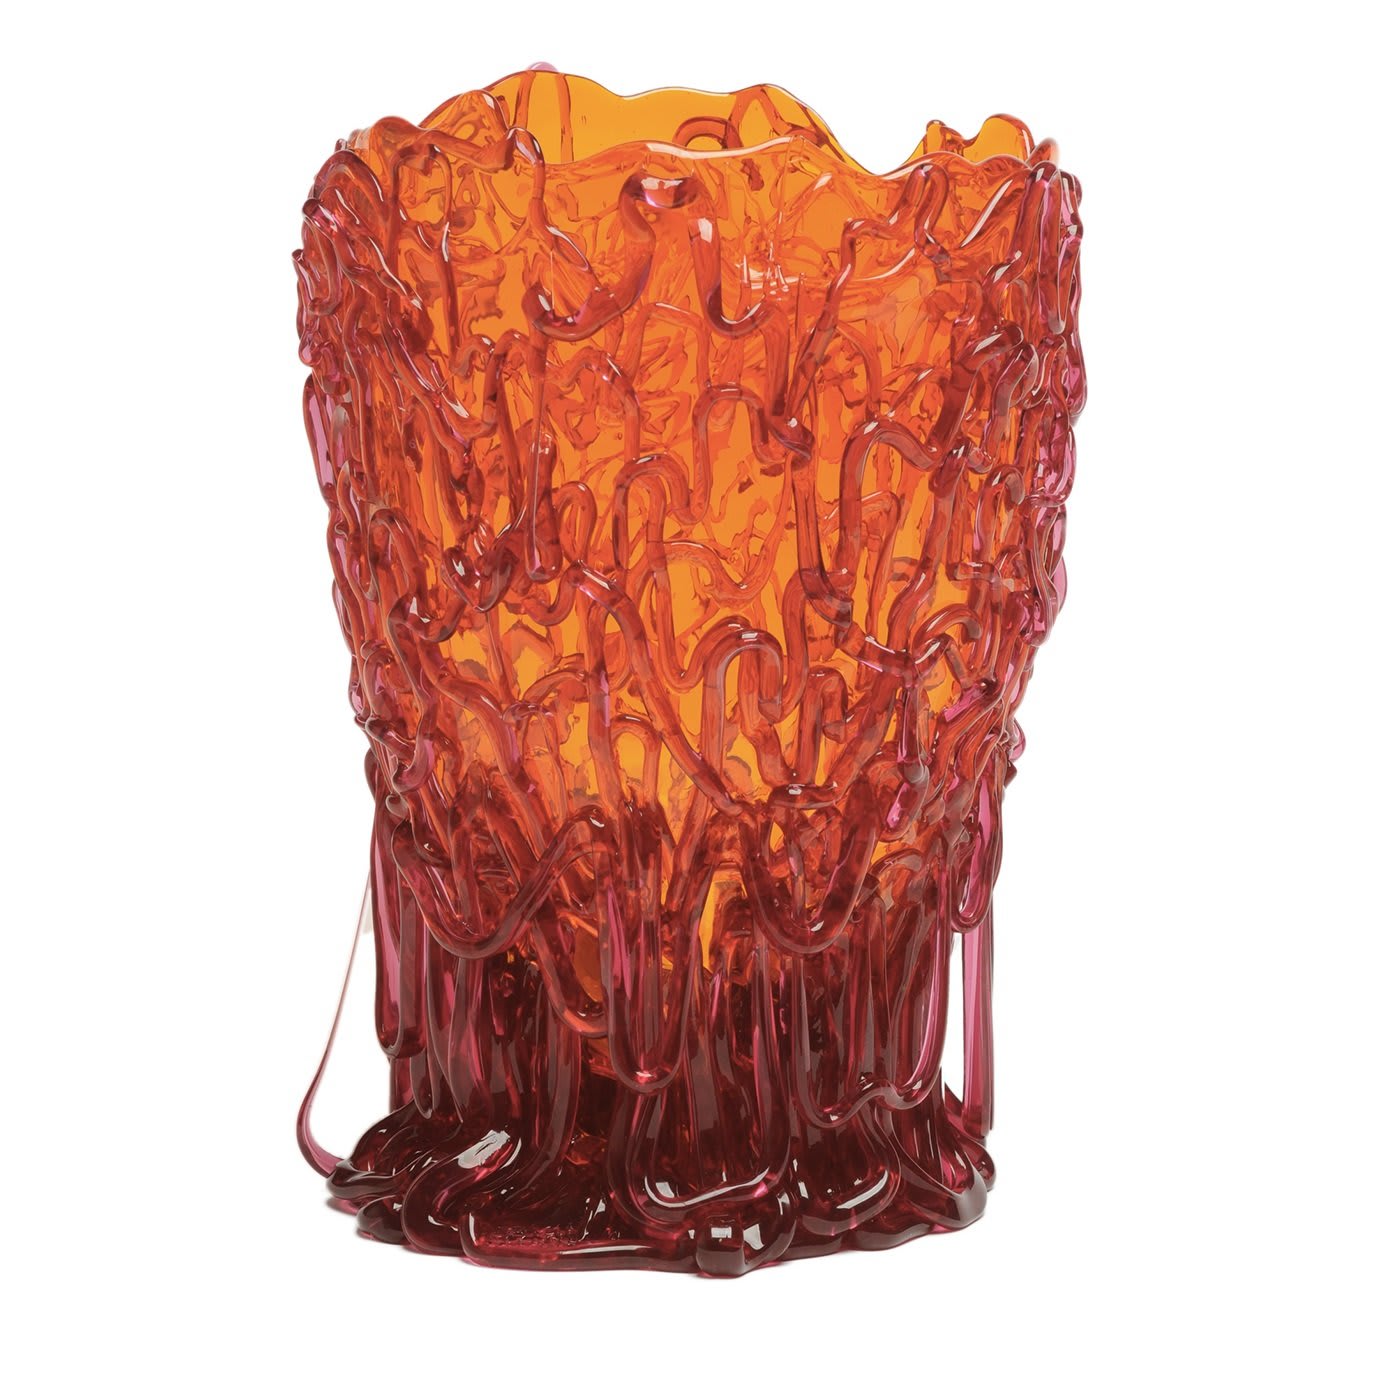 Medusa Large Vase - Corsi Design Factory